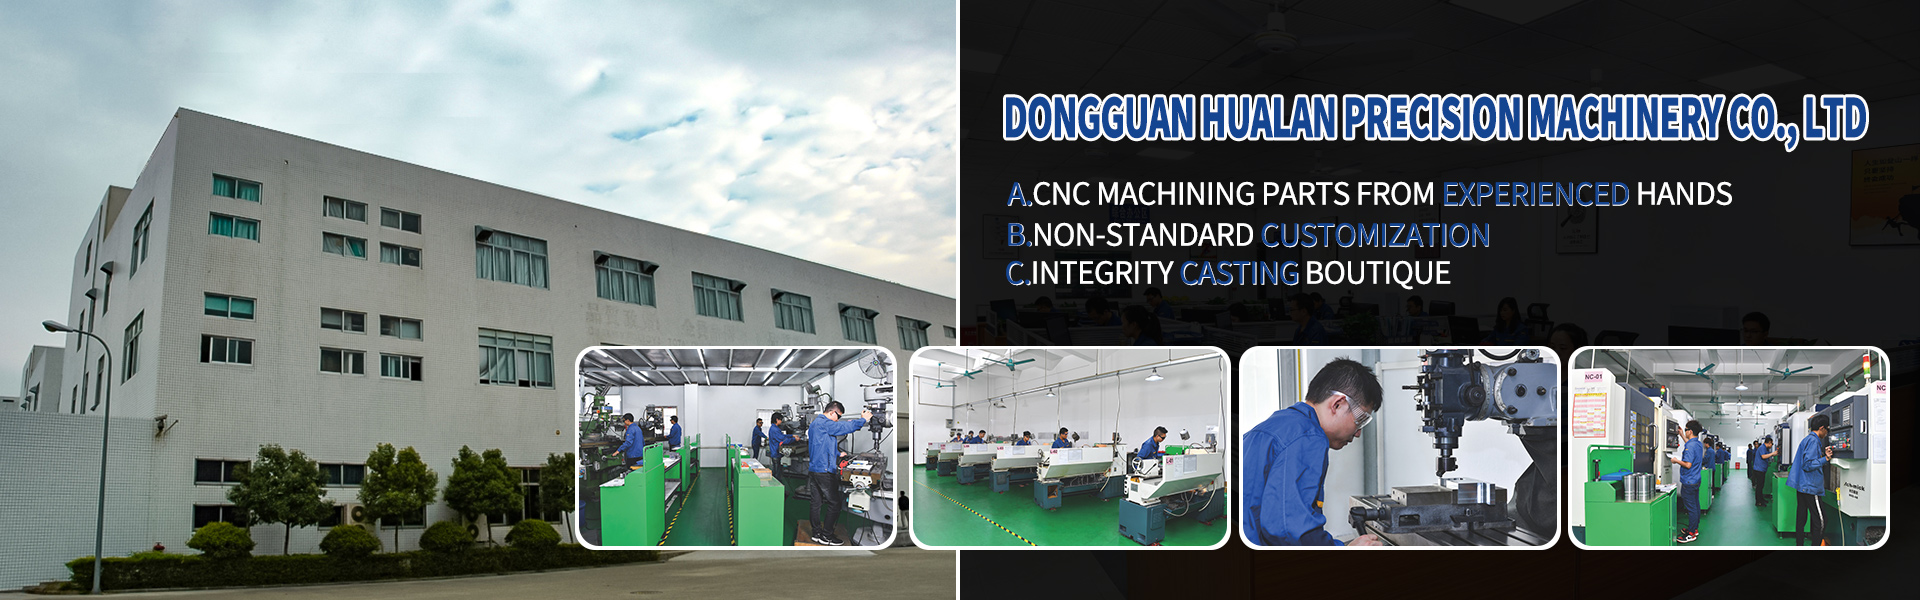 CNC-Bearbeitungsteile, Turieren und Fräsen, Leitungsschneiden,Dongguan Hualan Precision Machinery Co., LTD